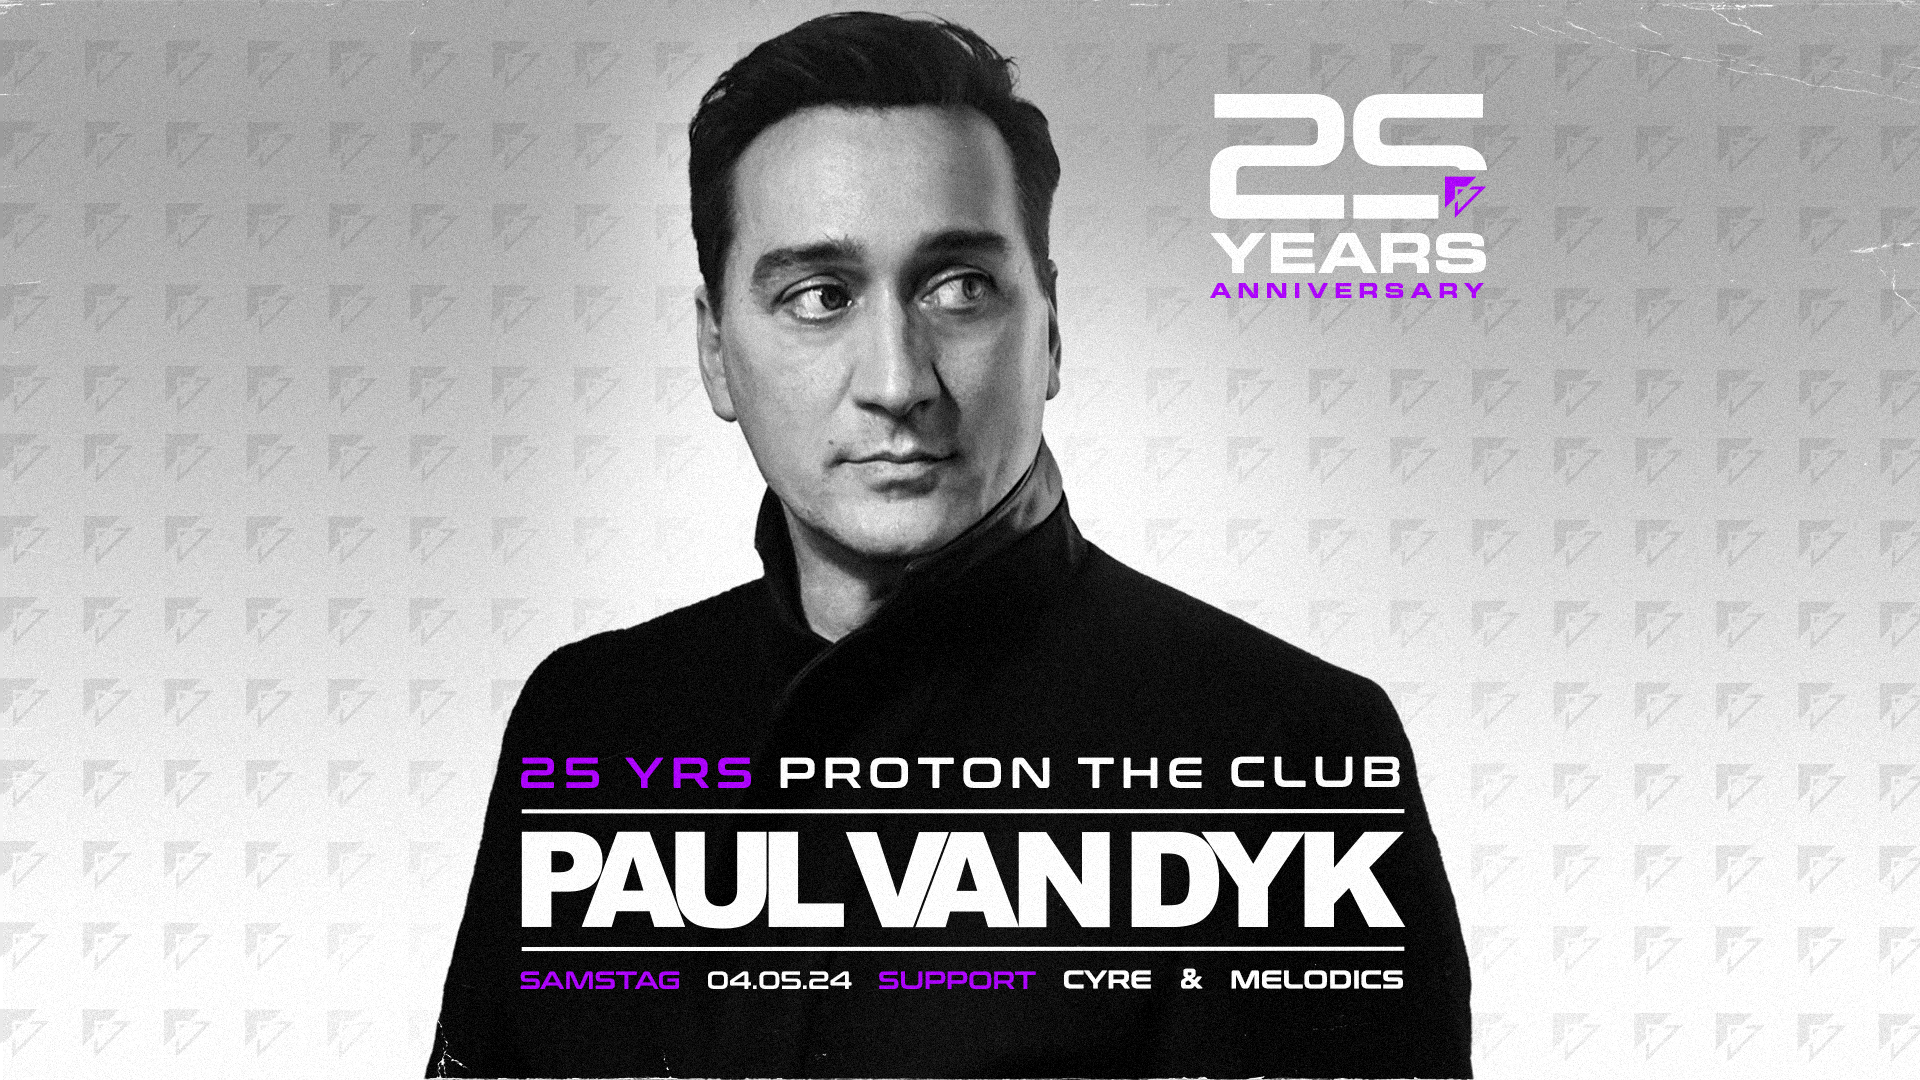 PROTON pres. Paul Van Dyk - 25 YRS Proton the Club - フライヤー表